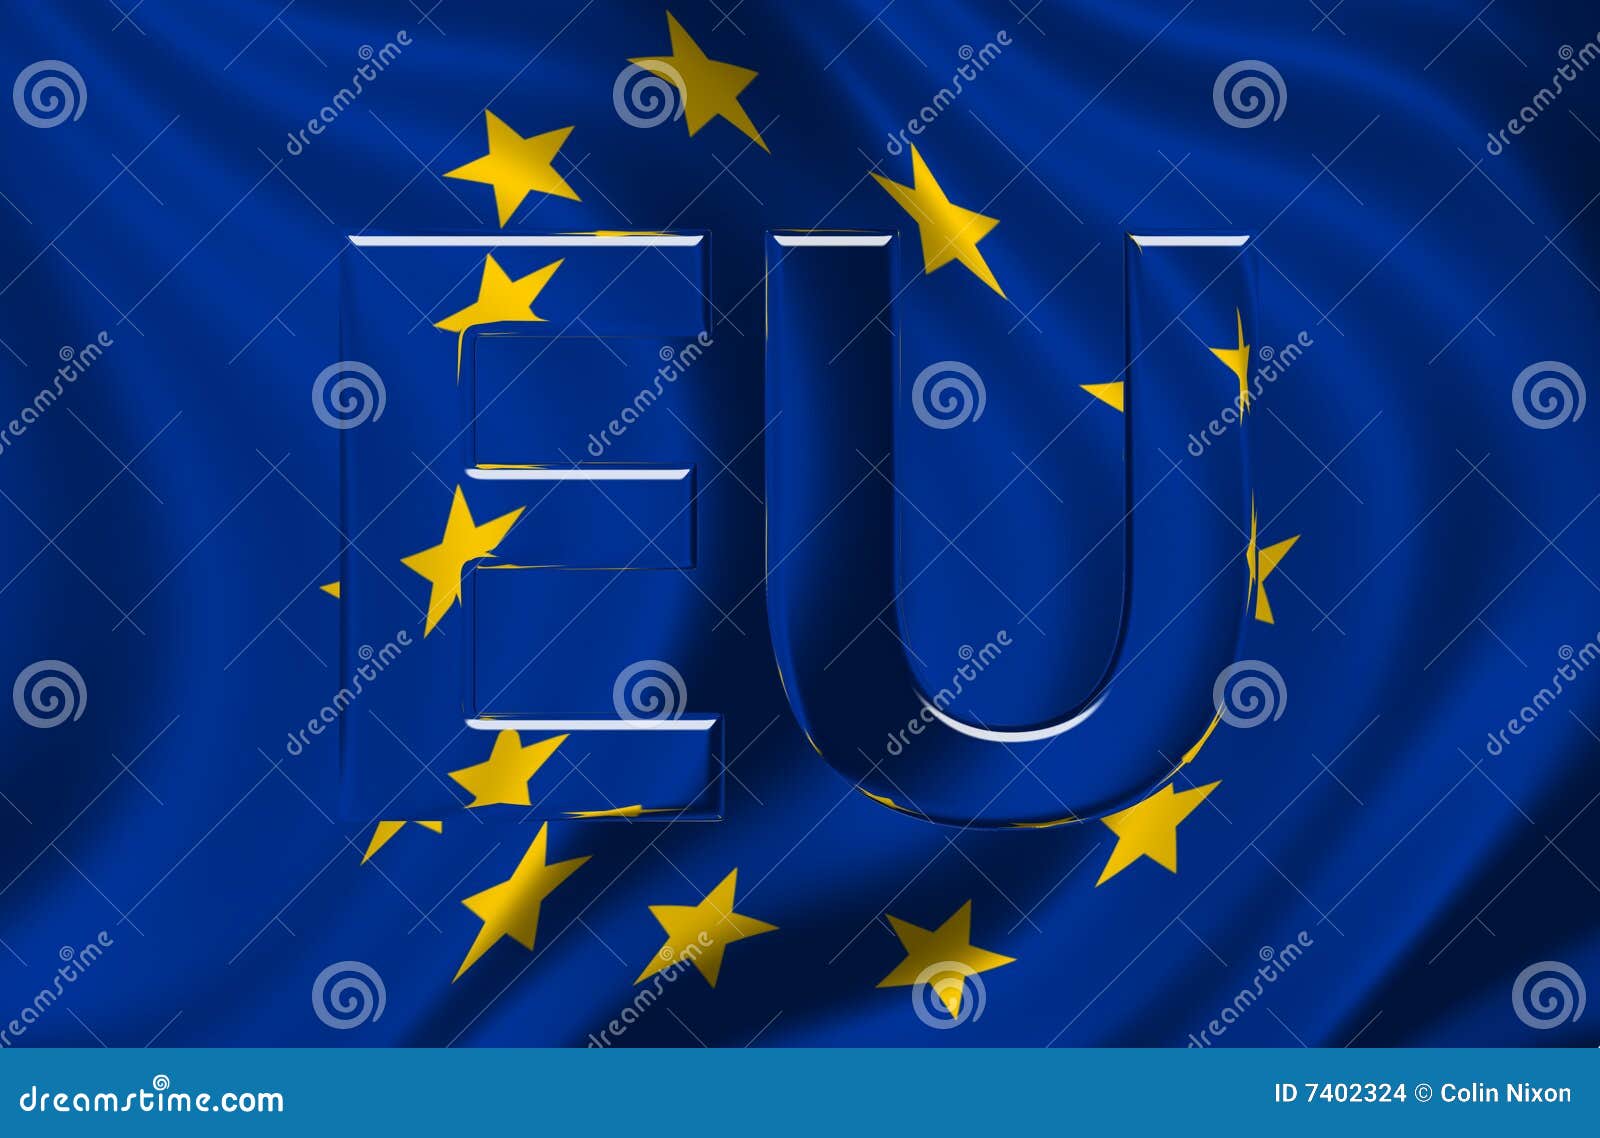 Евро звезды. Еврозона евро со звездами. Флаг европейского угольного Союза. Тень над Евросоюзом.